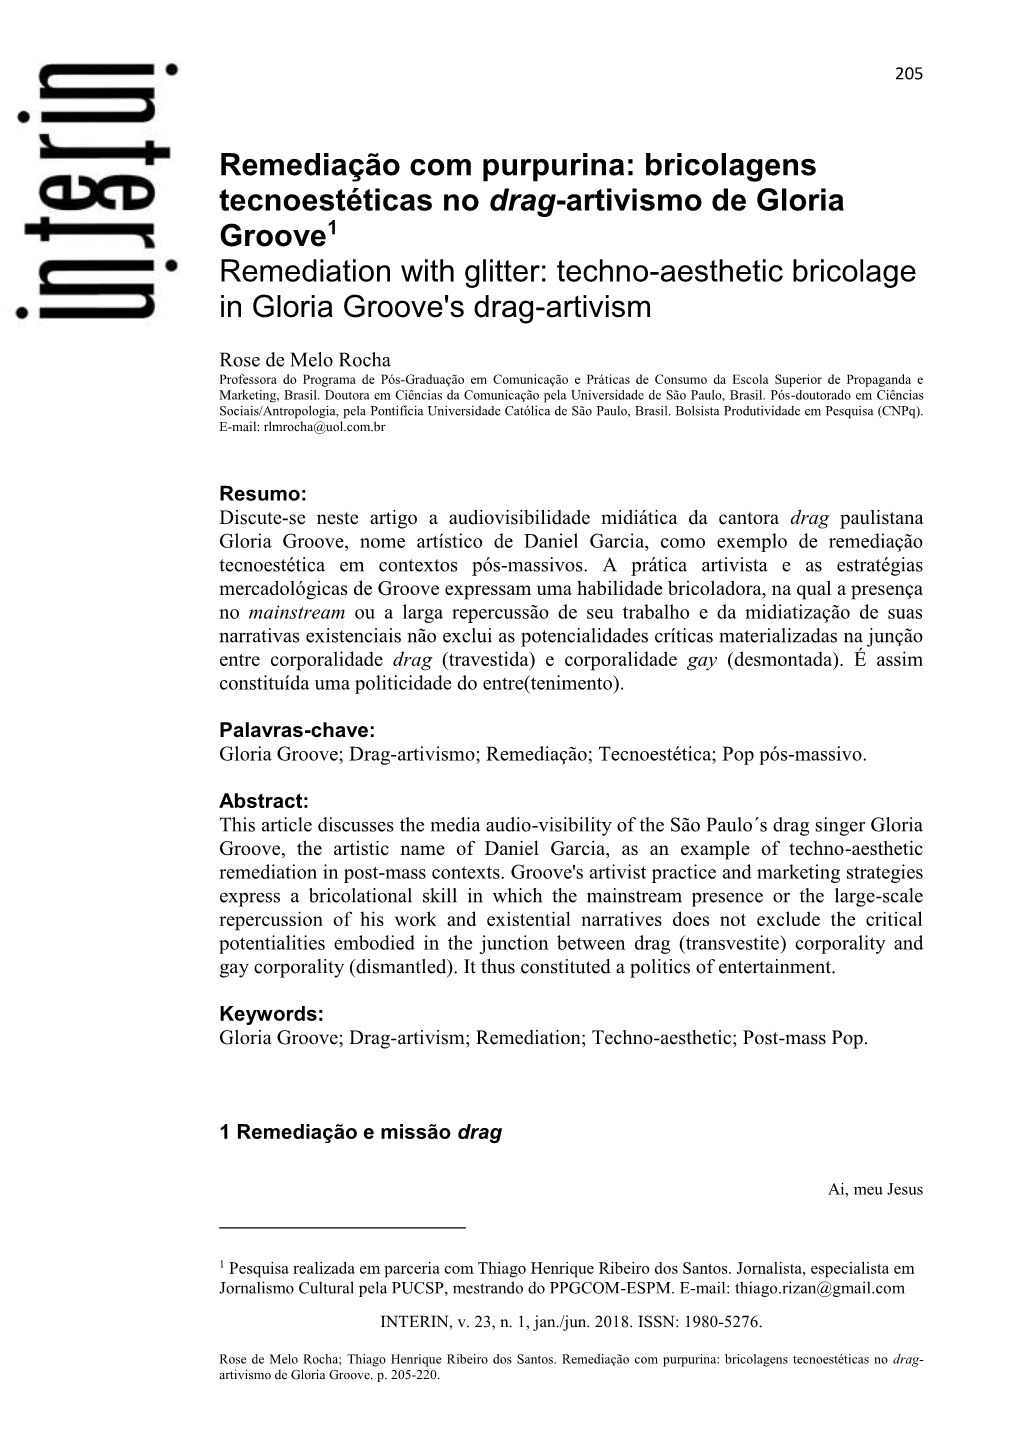 Bricolagens Tecnoestéticas No Drag-Artivismo De Gloria Groove1 Remediation with Glitter: Techno-Aesthetic Bricolage in Gloria Groove's Drag-Artivism